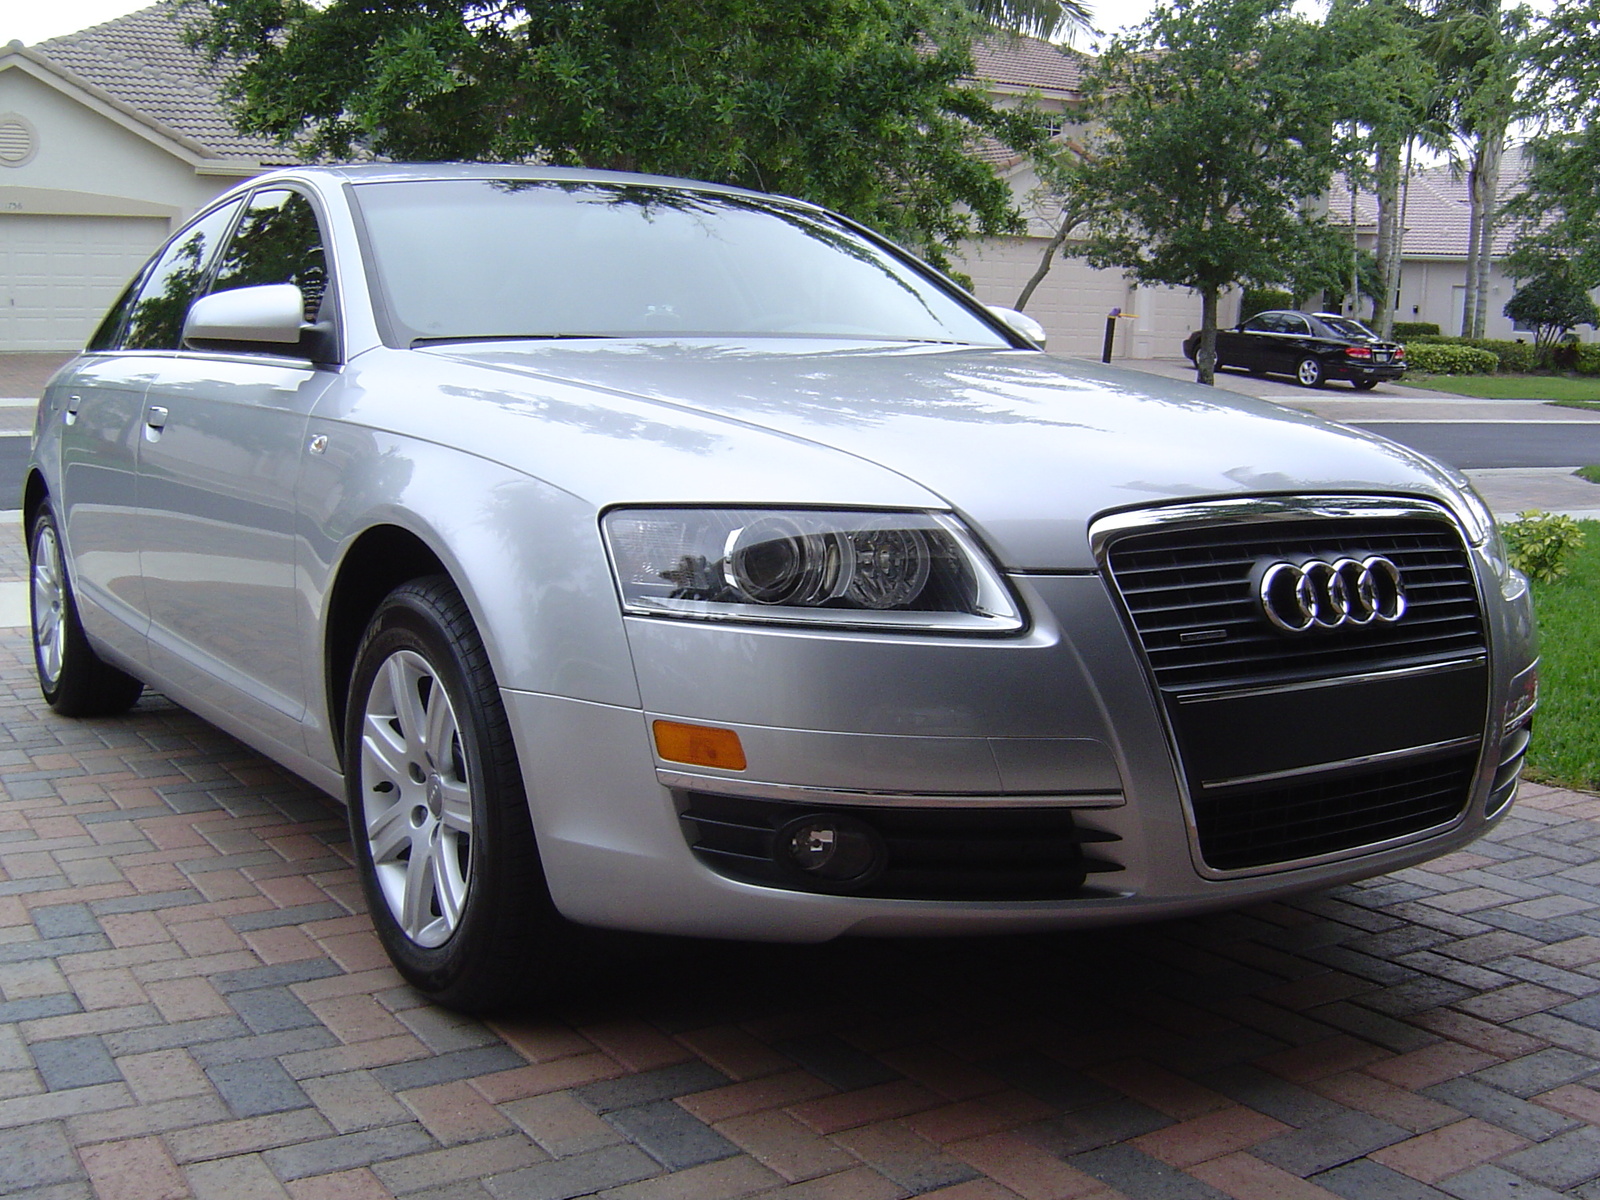 Audi a6 2005